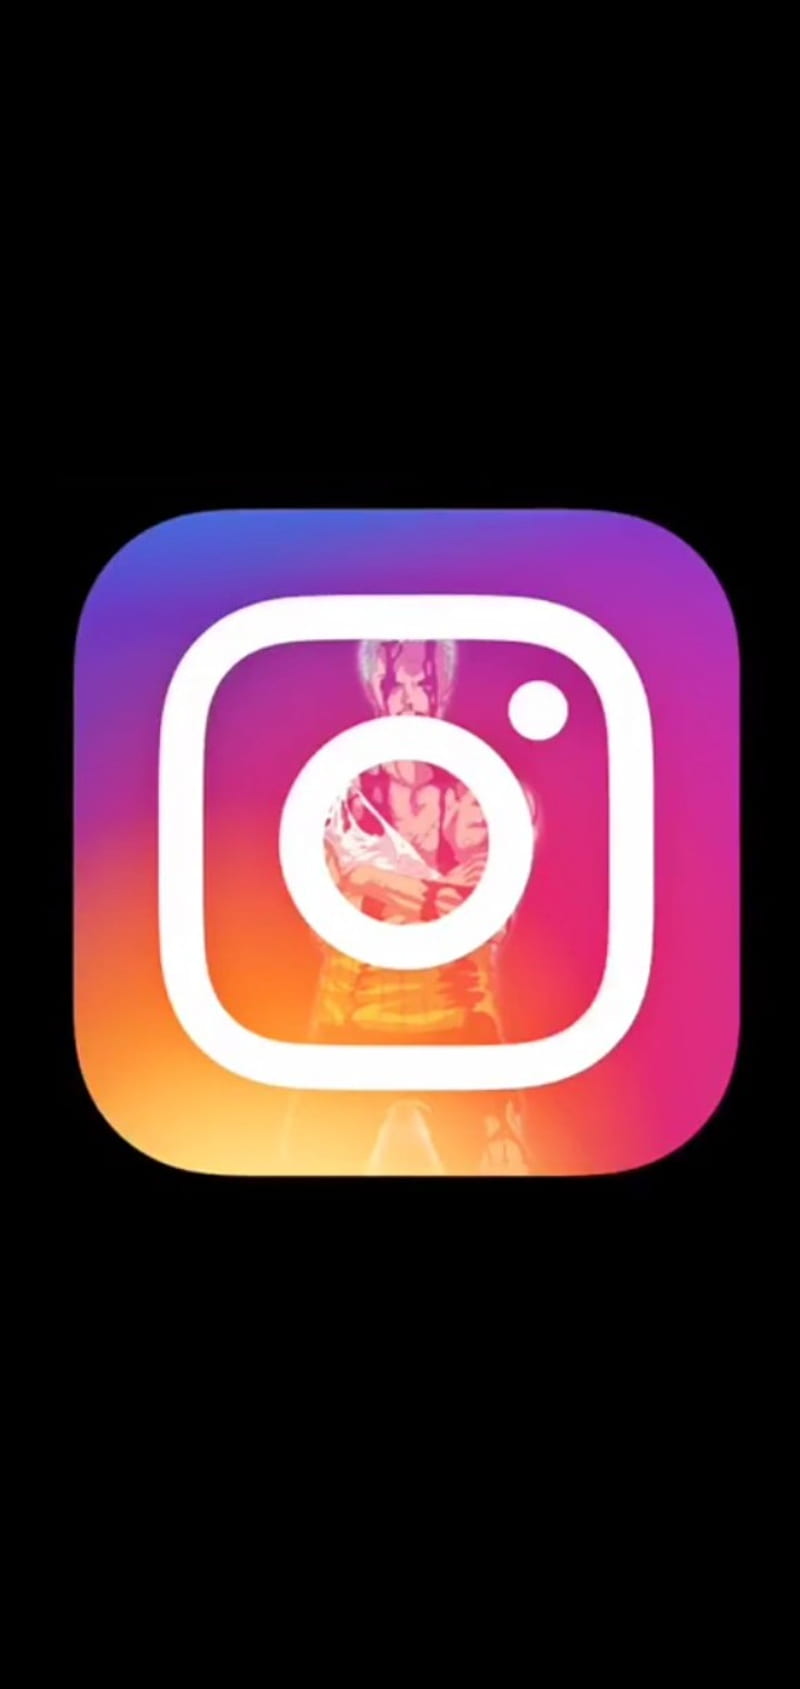 𝗔𝗡𝗜𝗠𝗘 𝗜𝗖𝗢𝗡𝗦 (@iconsxsenpai) • Instagram photos and videos